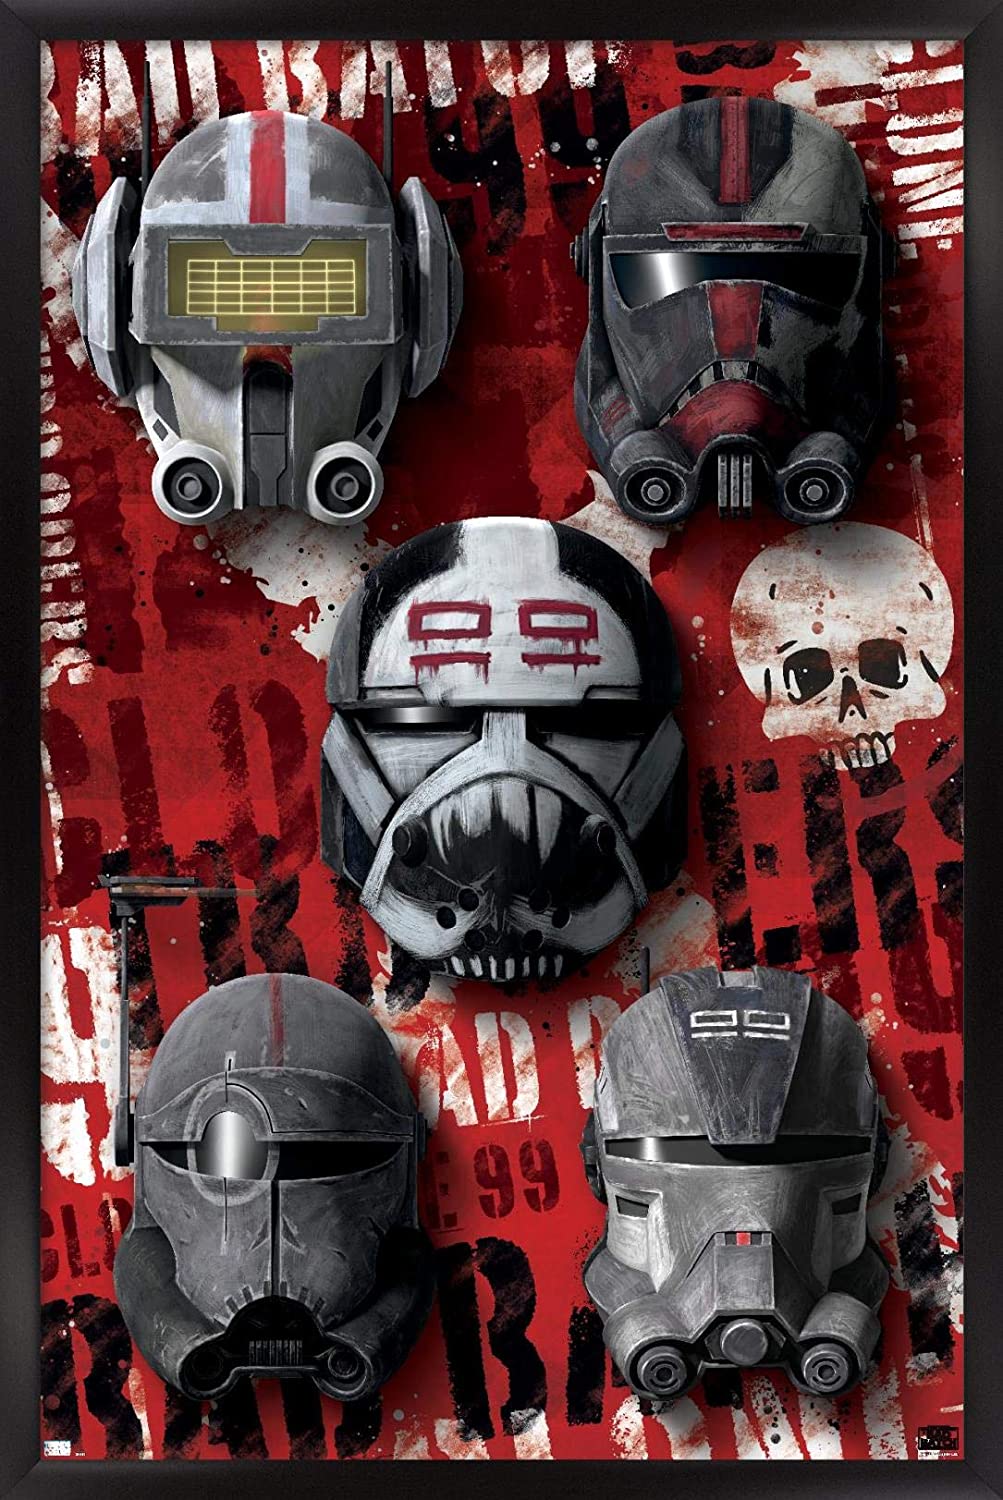 SWTBB Helmets Wall Poster 1